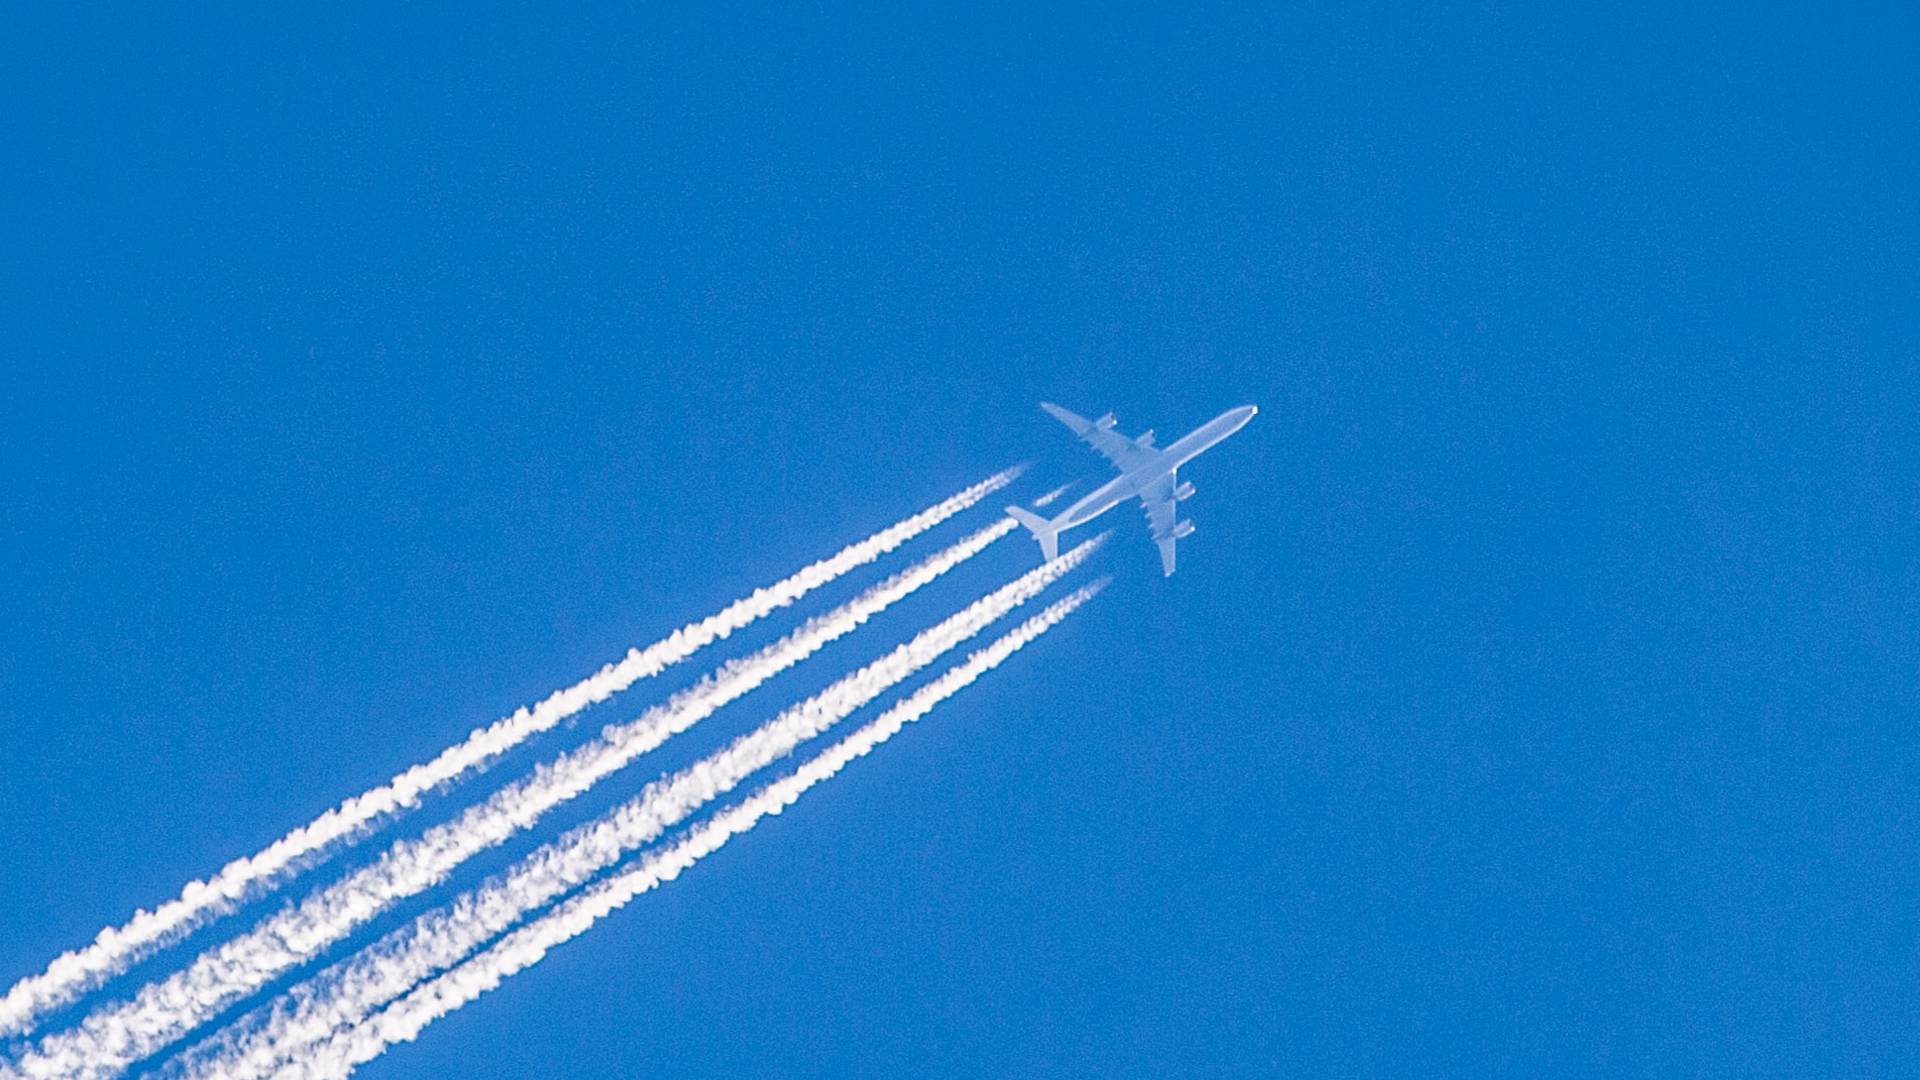 Dihydrogen Monoxide – A Threat To Aviation’s Future?